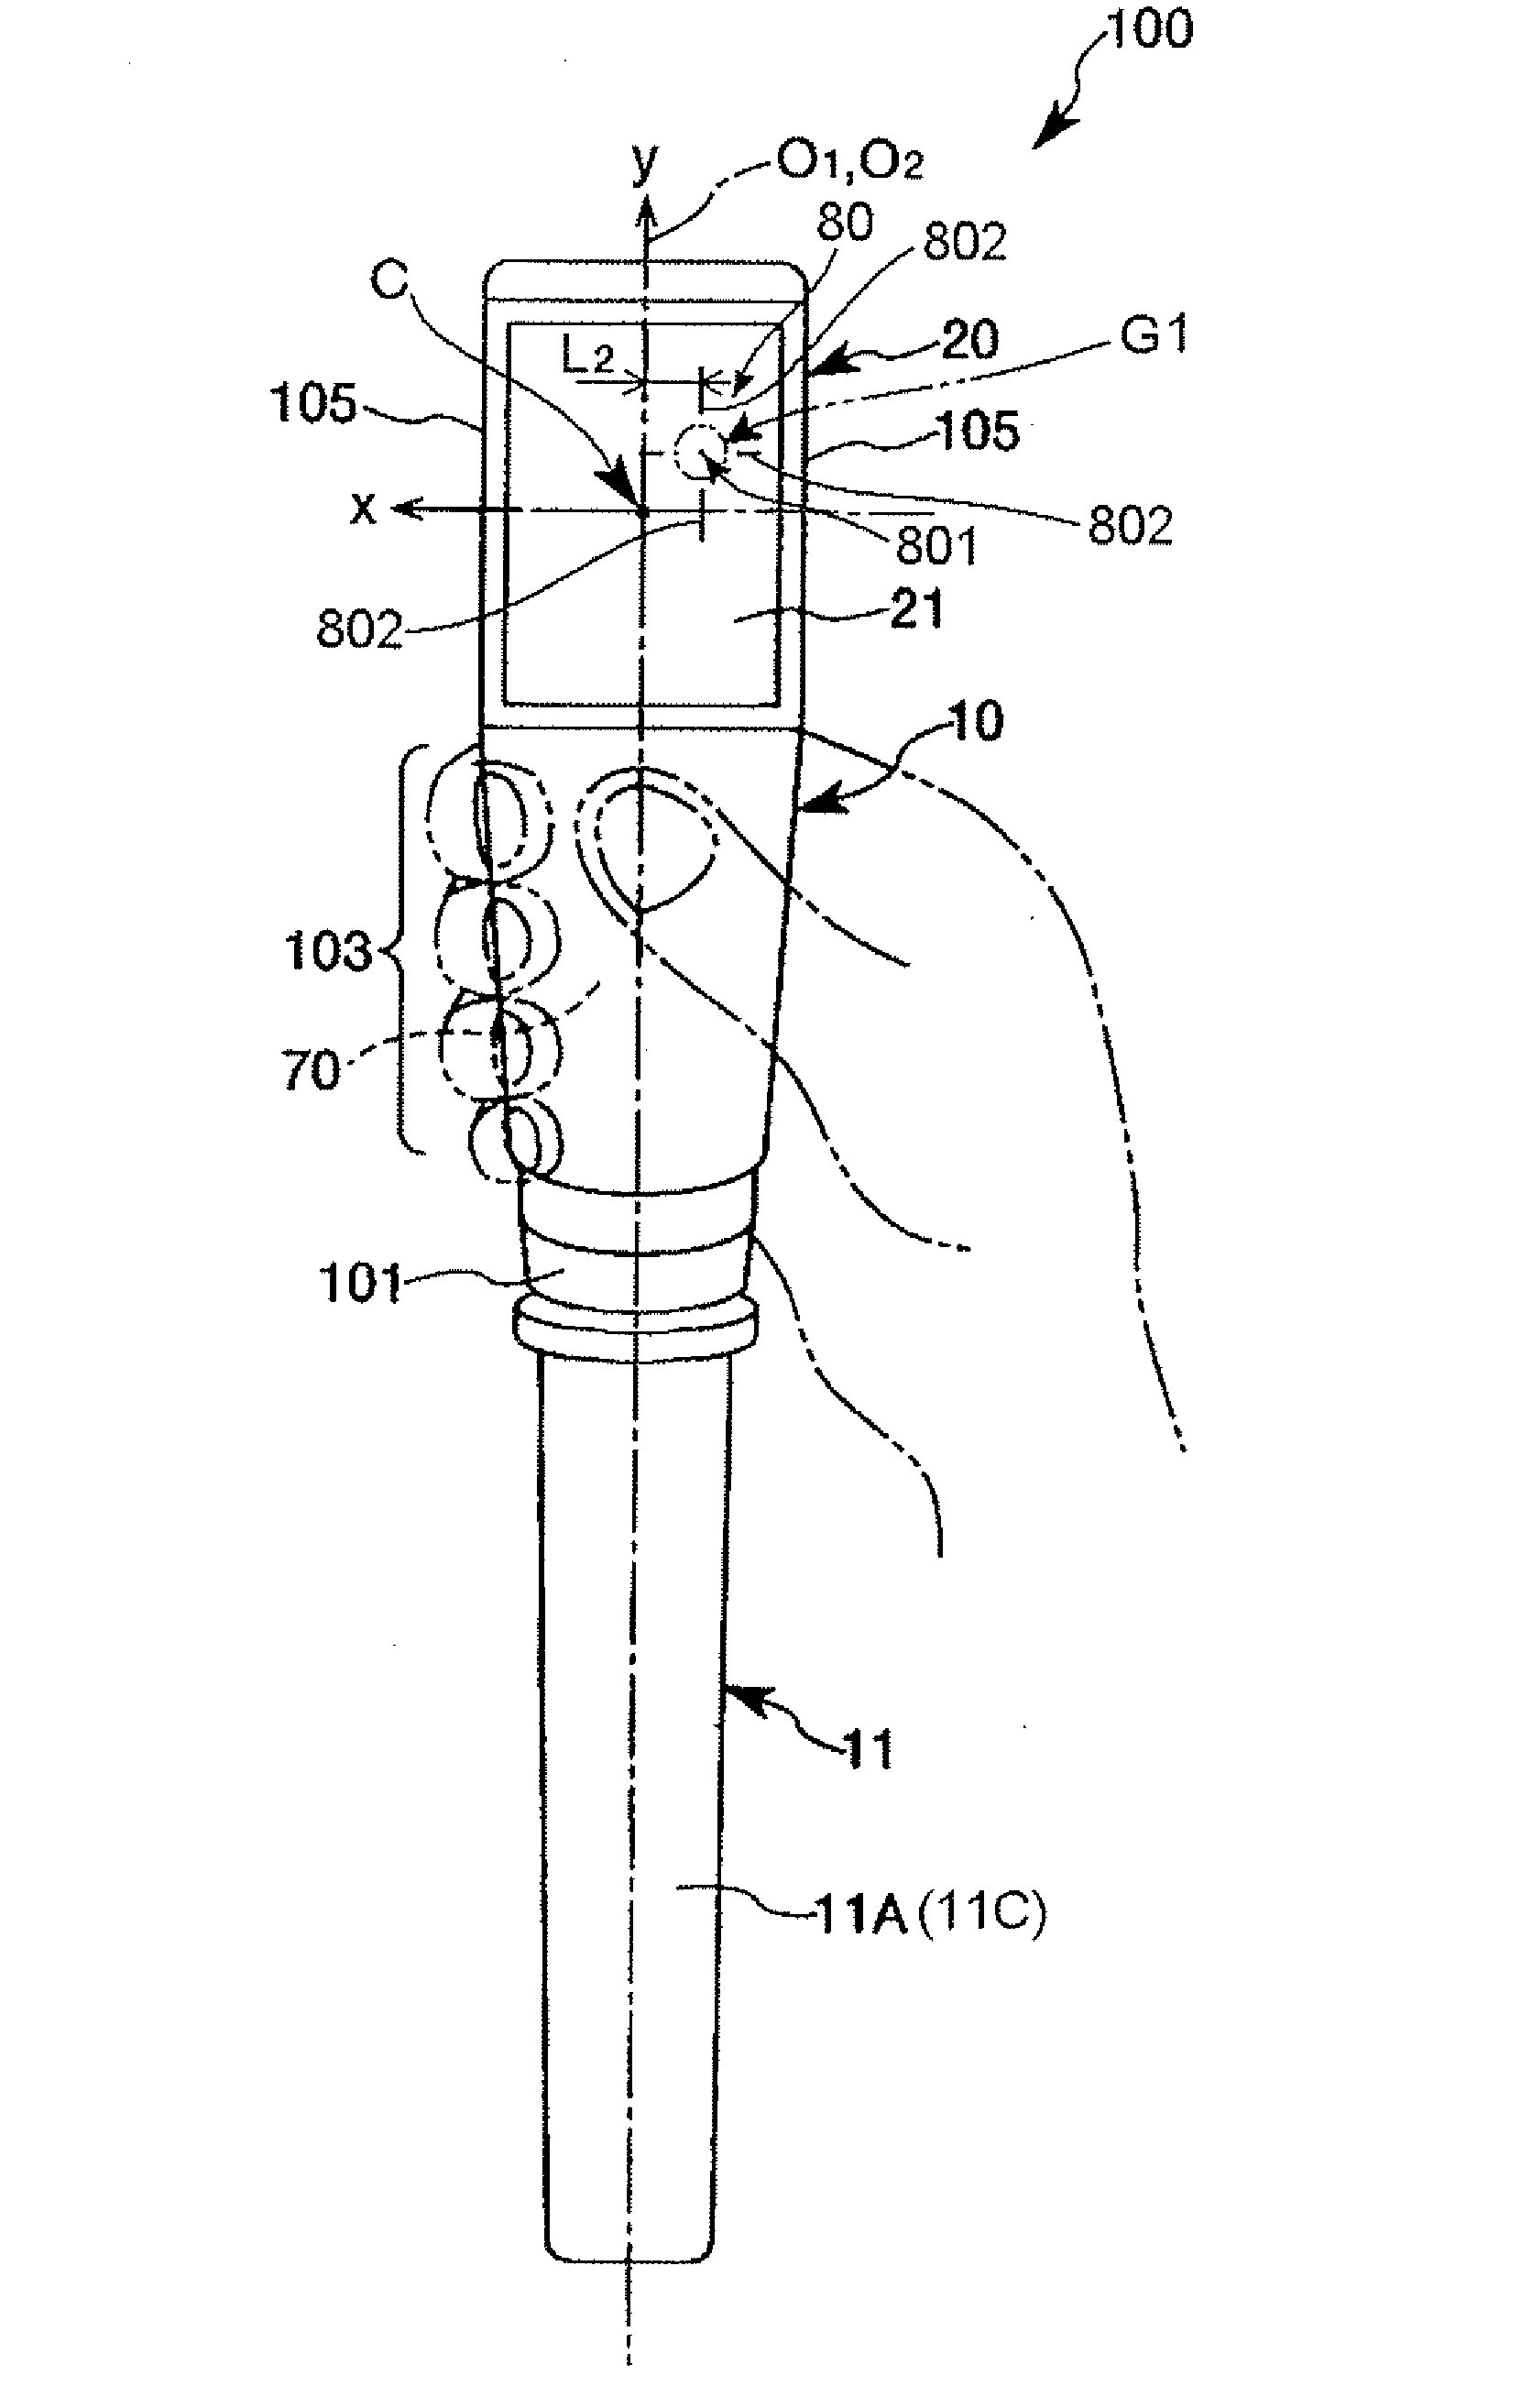 Intubation assistance apparatus